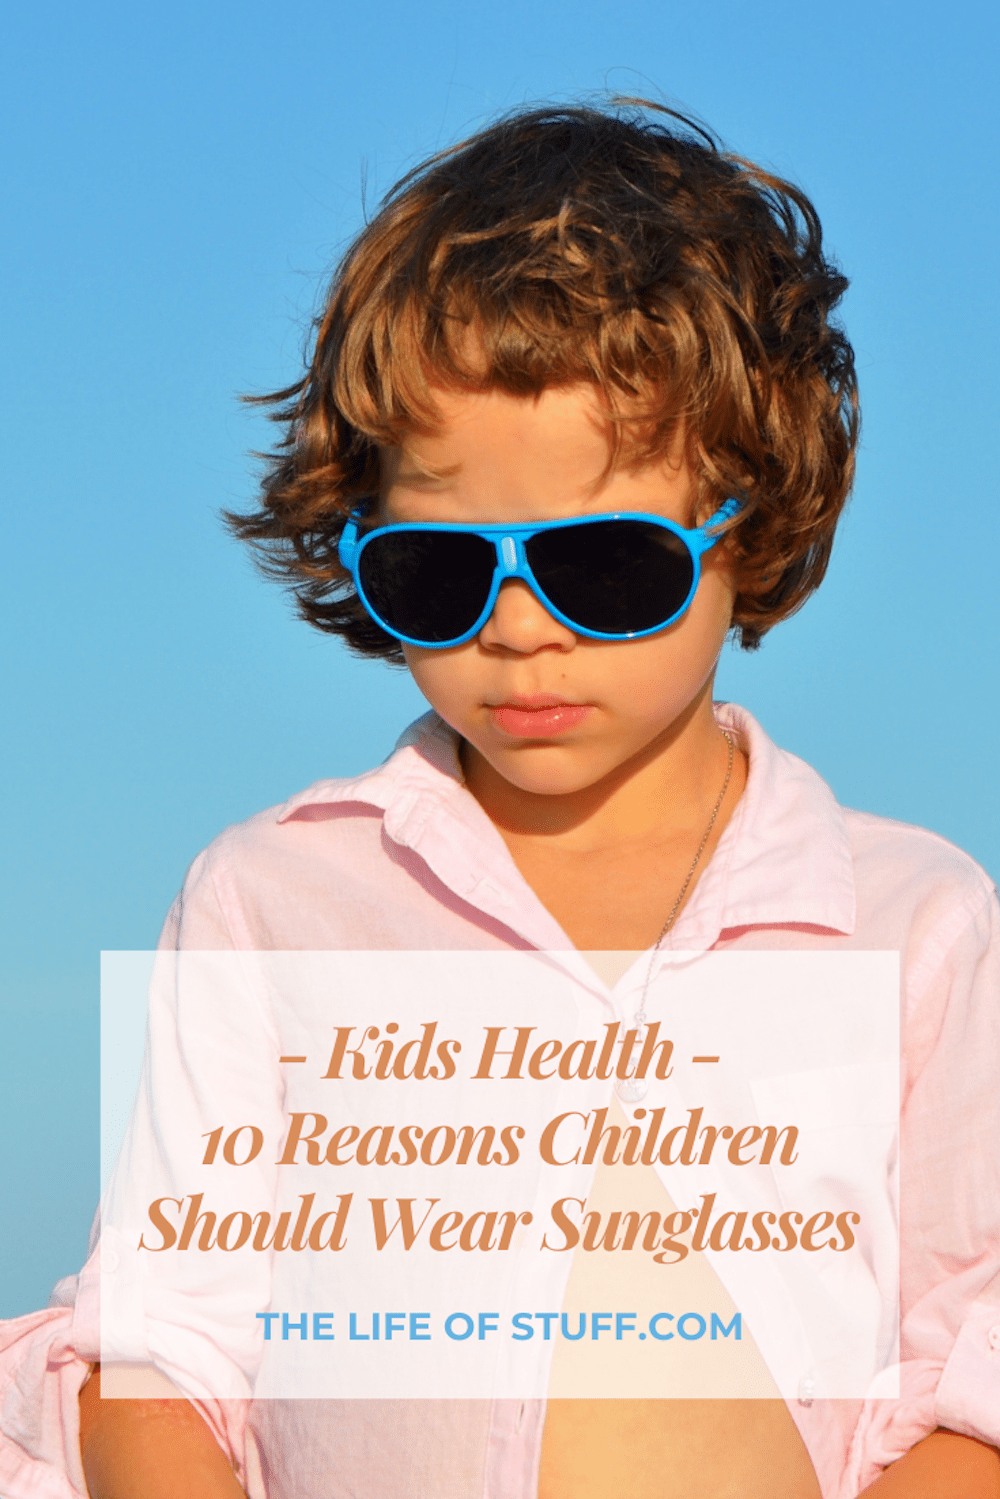 Kids Health - 10 Reasons Children Should Wear Sunglasses - The Life of Stuff